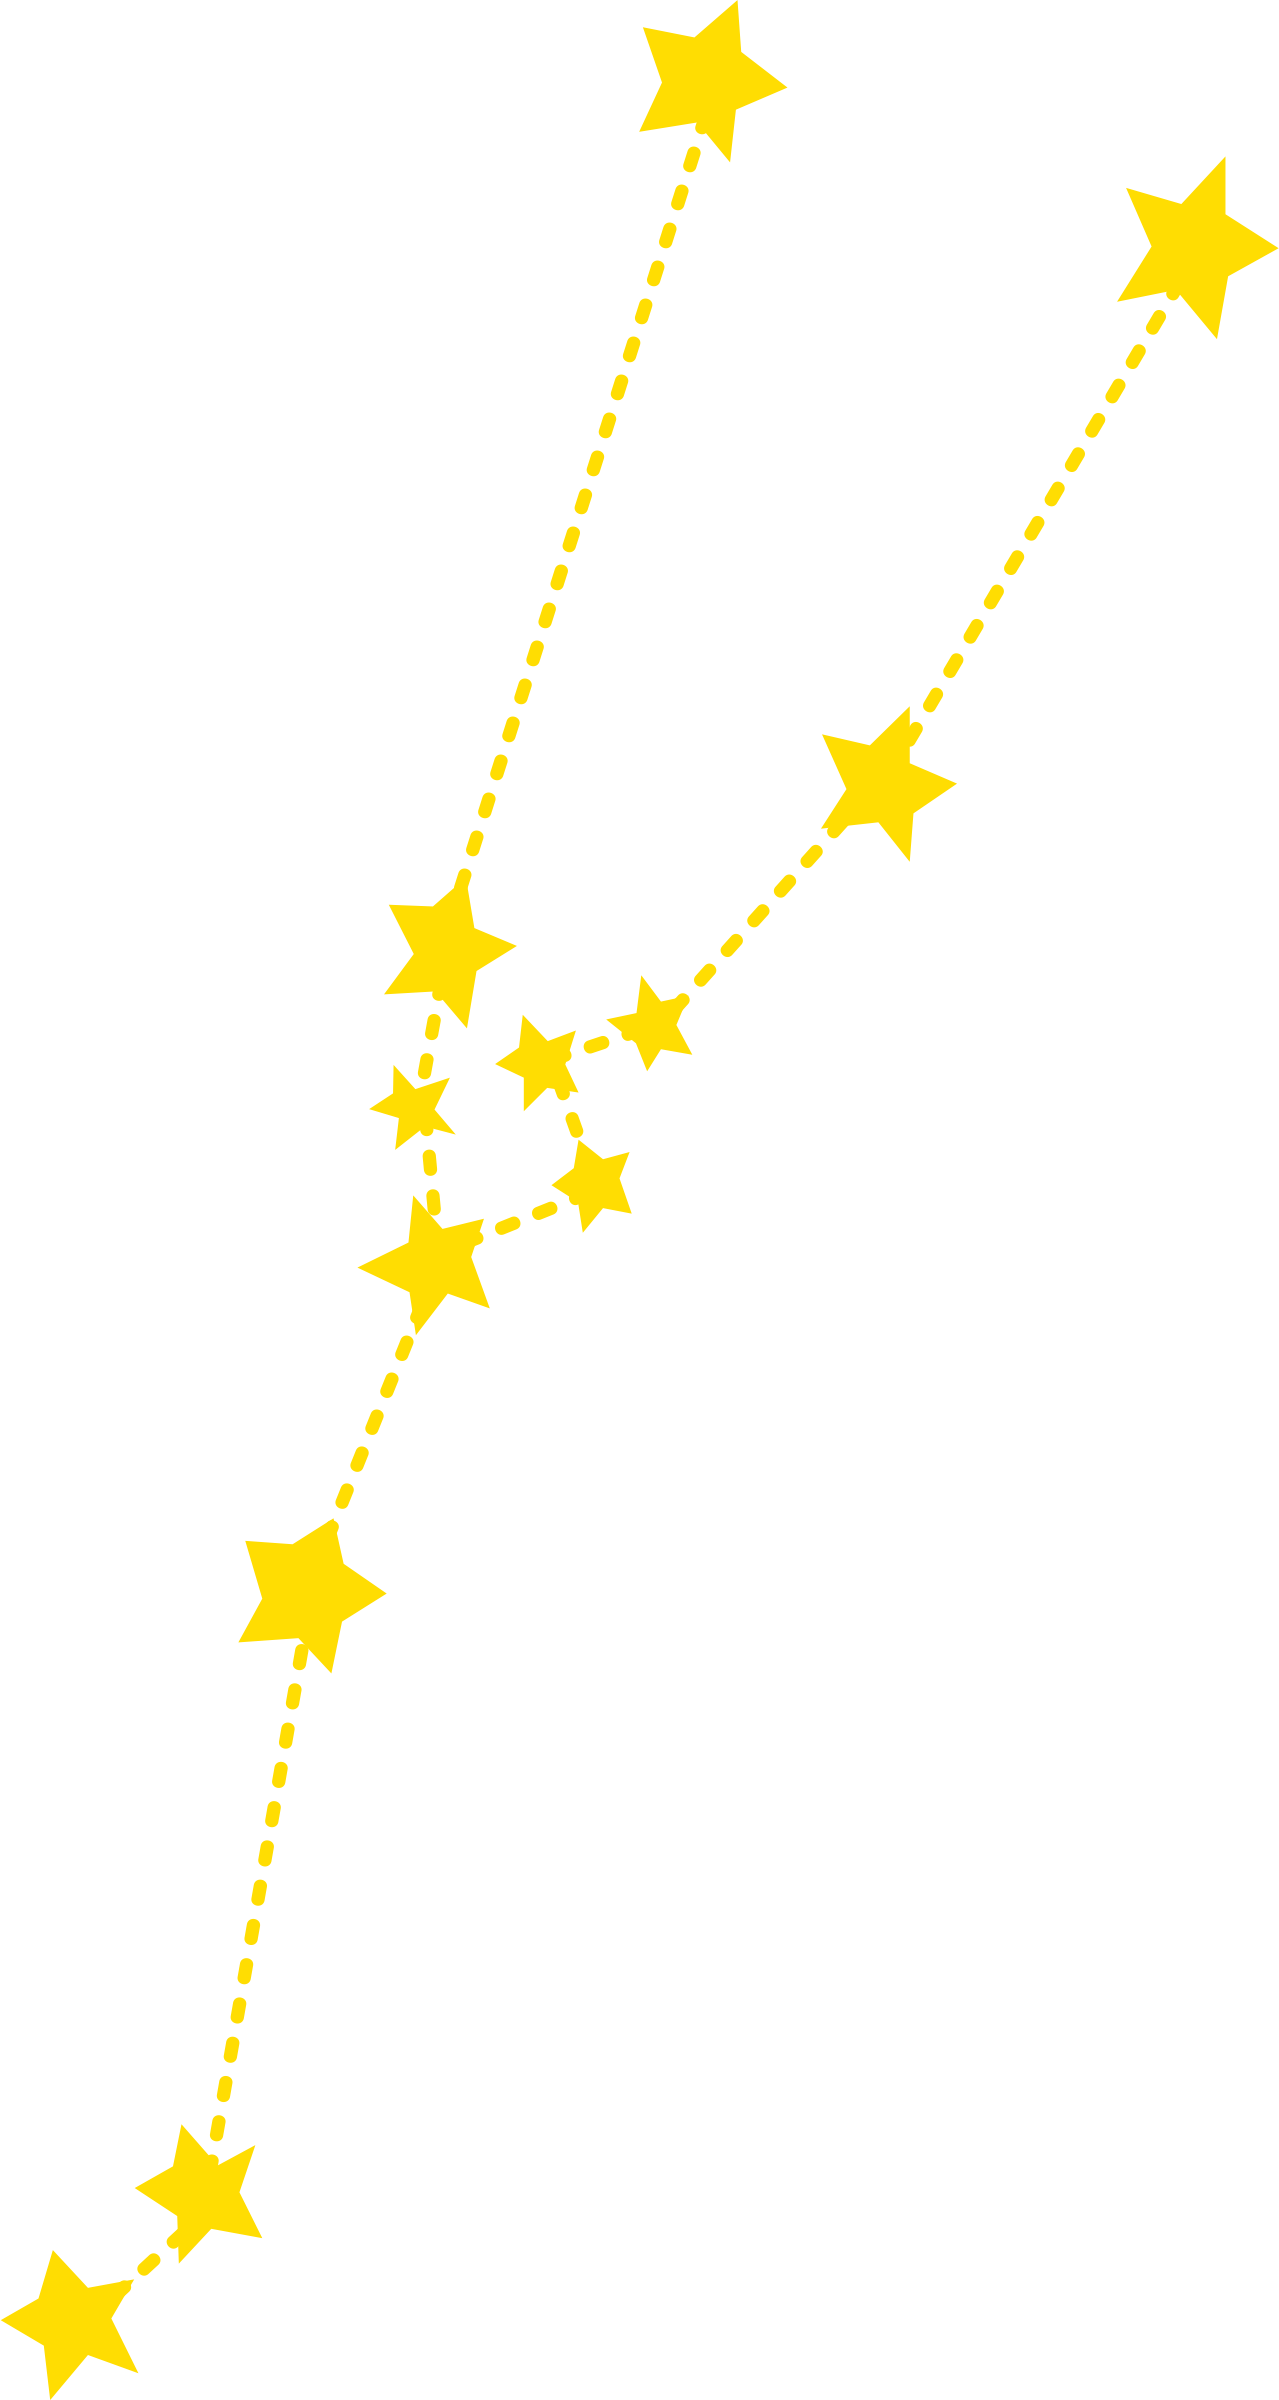 Big Image - Constellation (1279x2400)